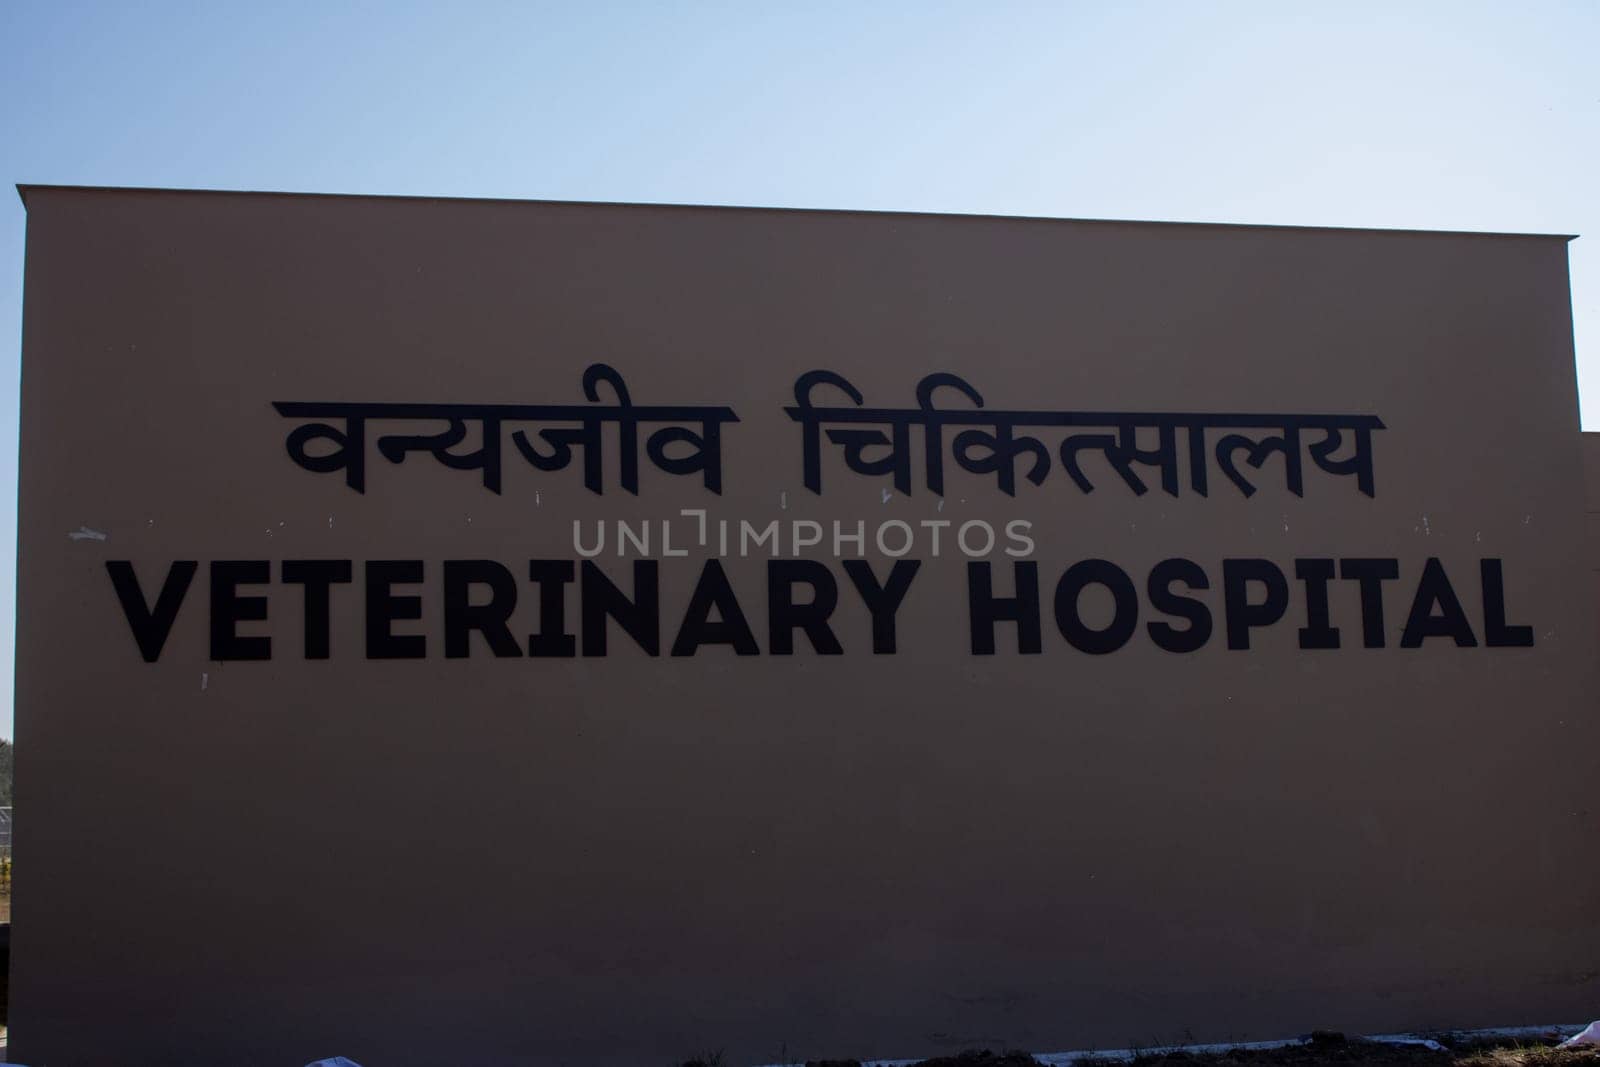 Uttarakhand's veterinary hospital, where compassionate care meets breathtaking natural beauty